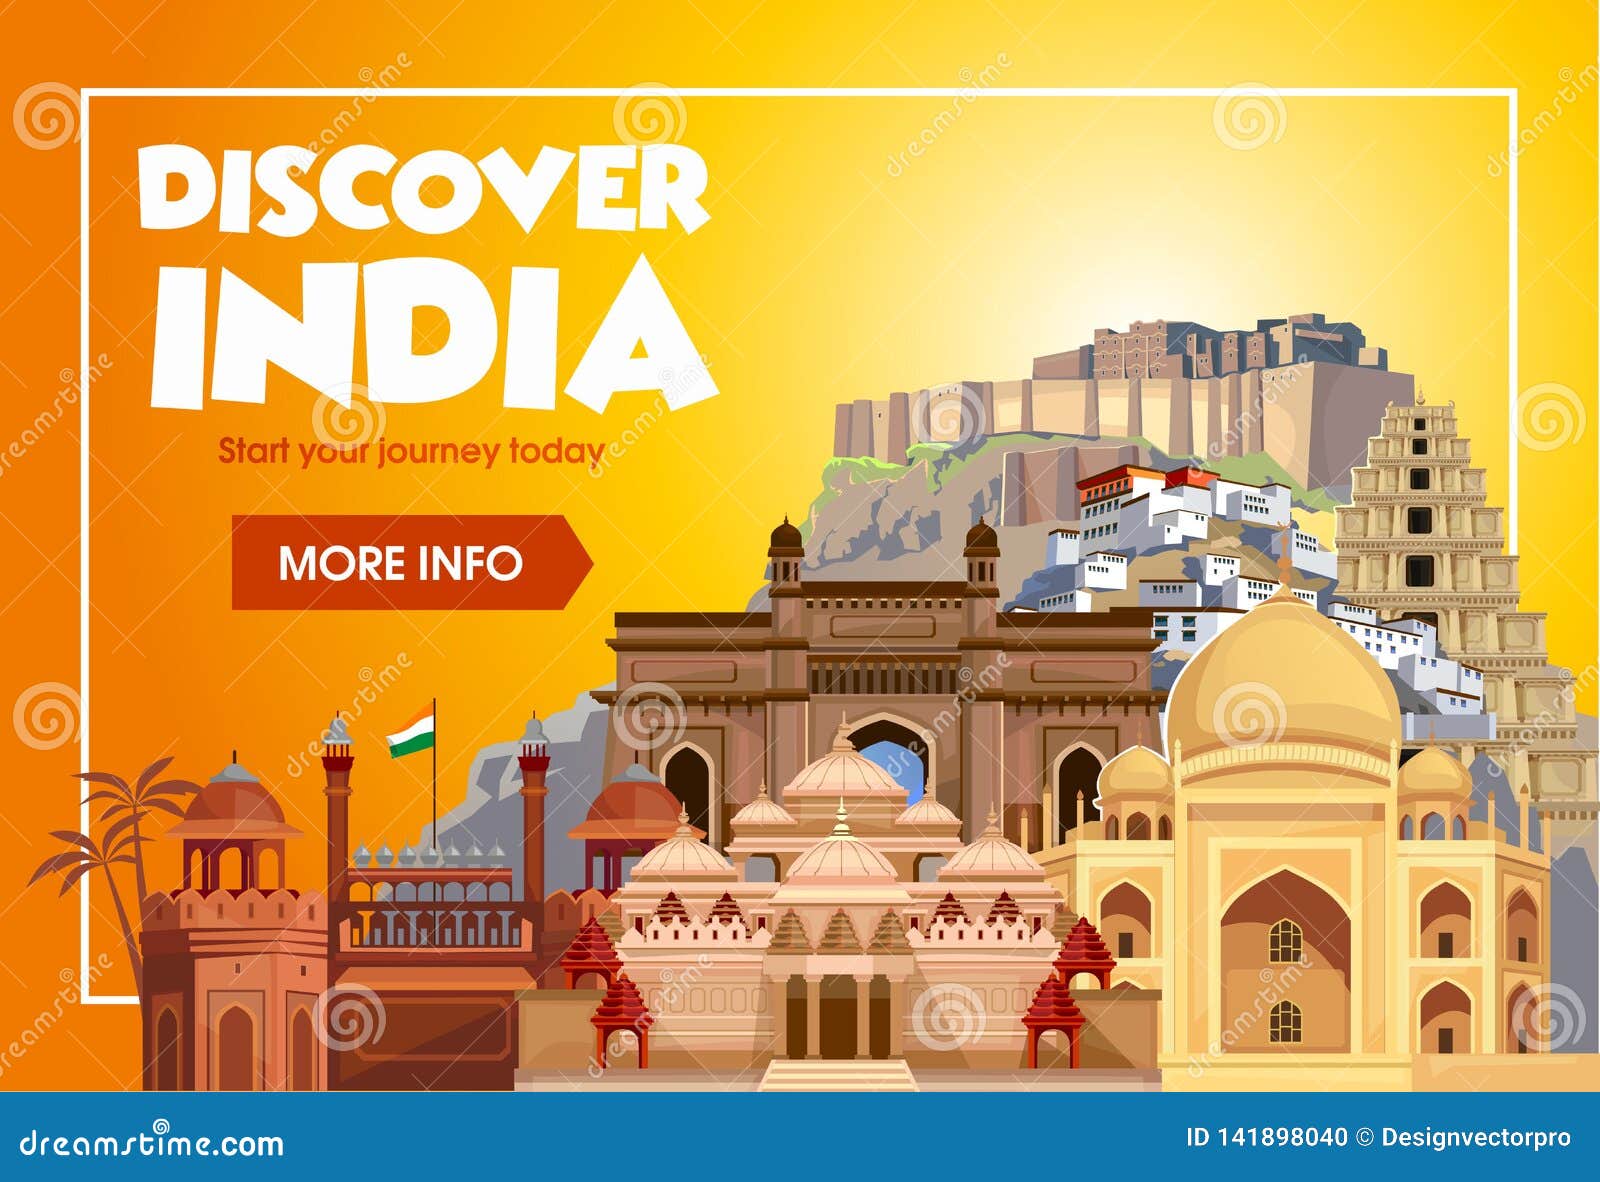 road trip sponsorship india